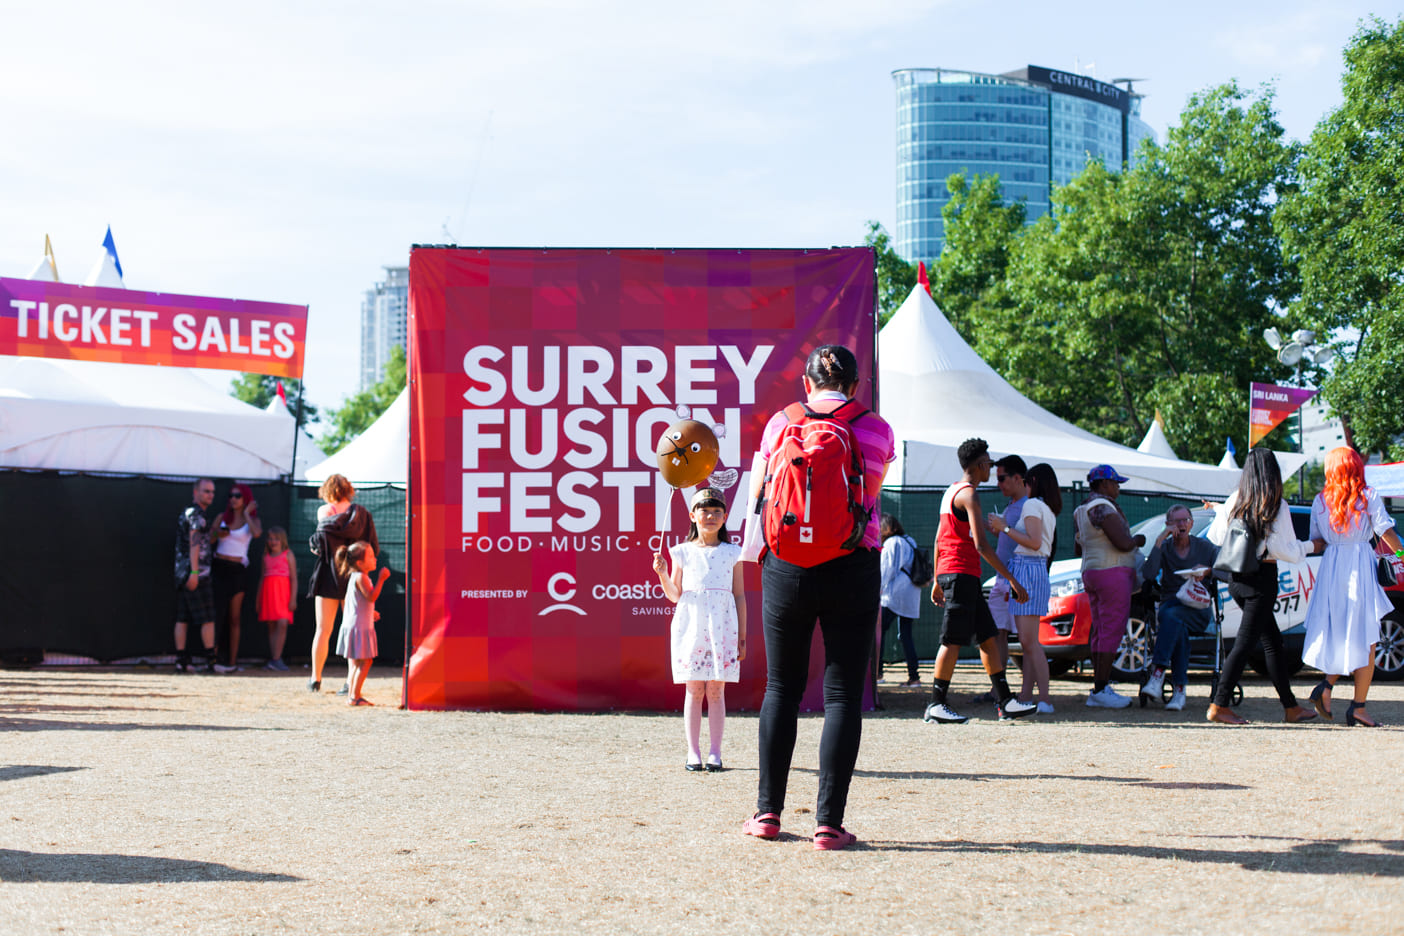 Surrey Fusion Festival large square banner